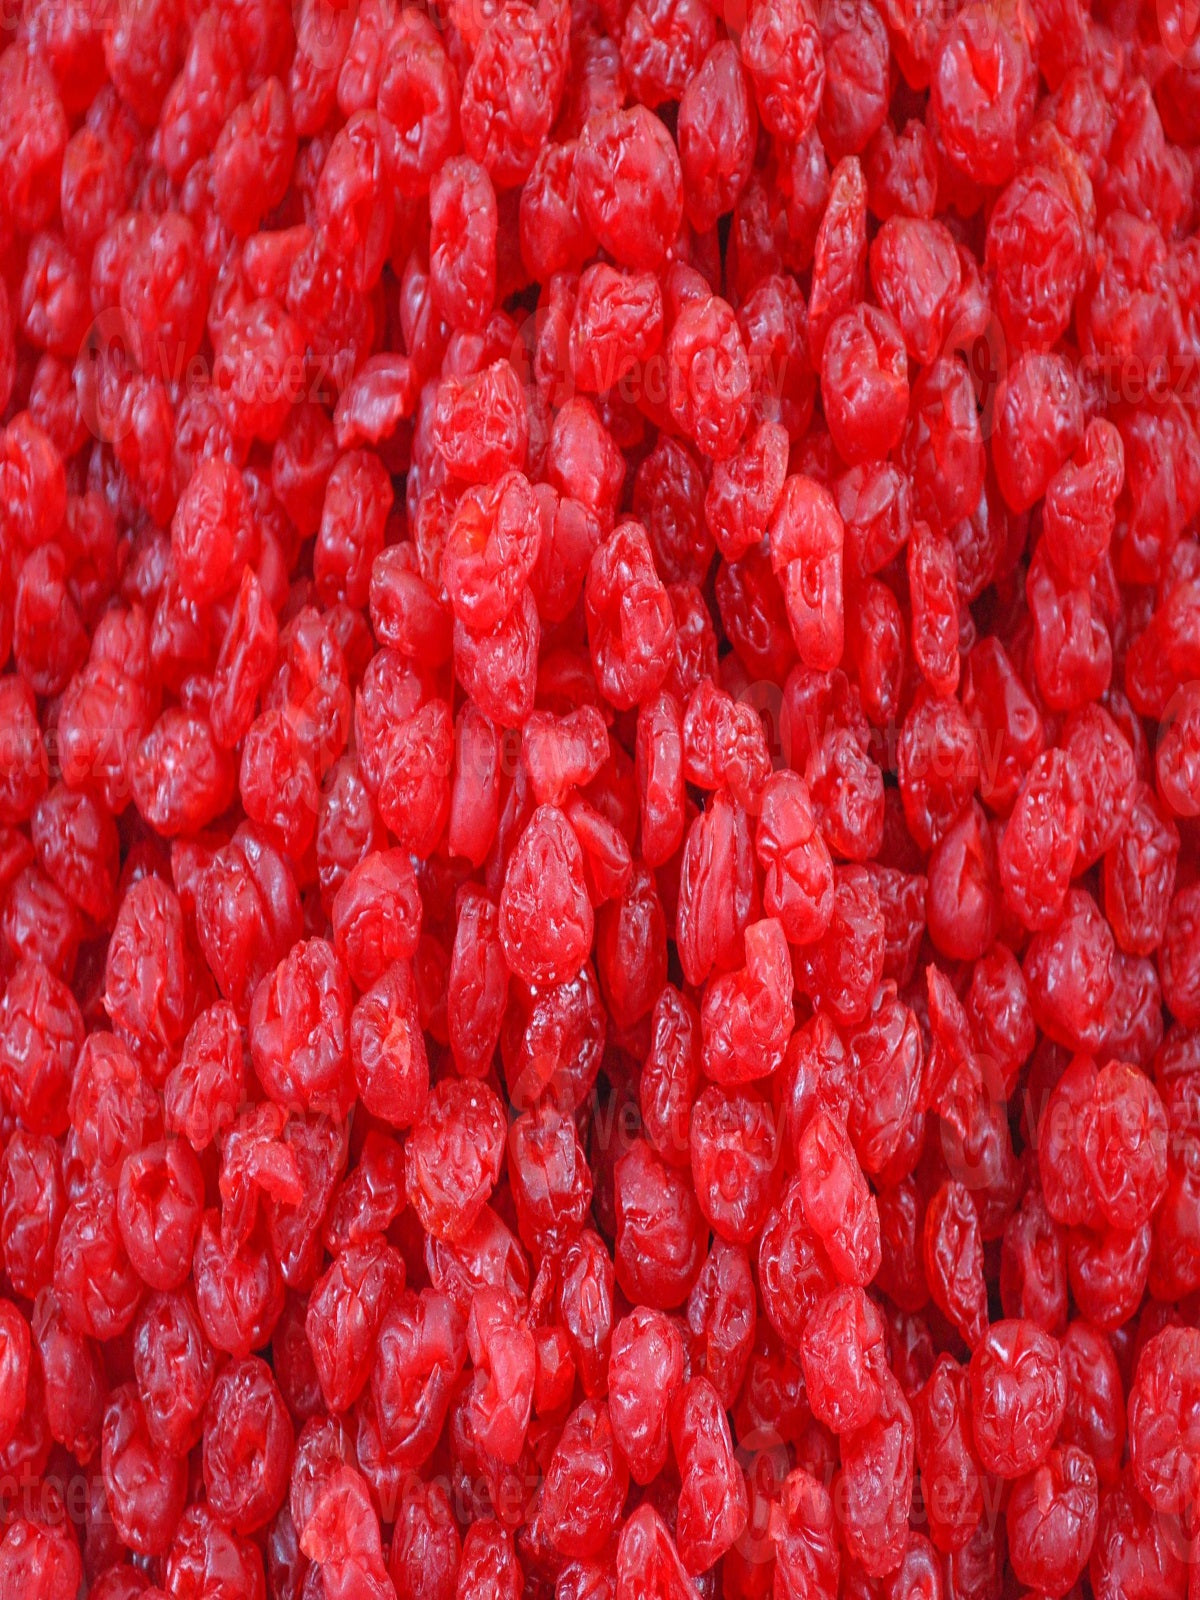 Premium Quality Red Cherry